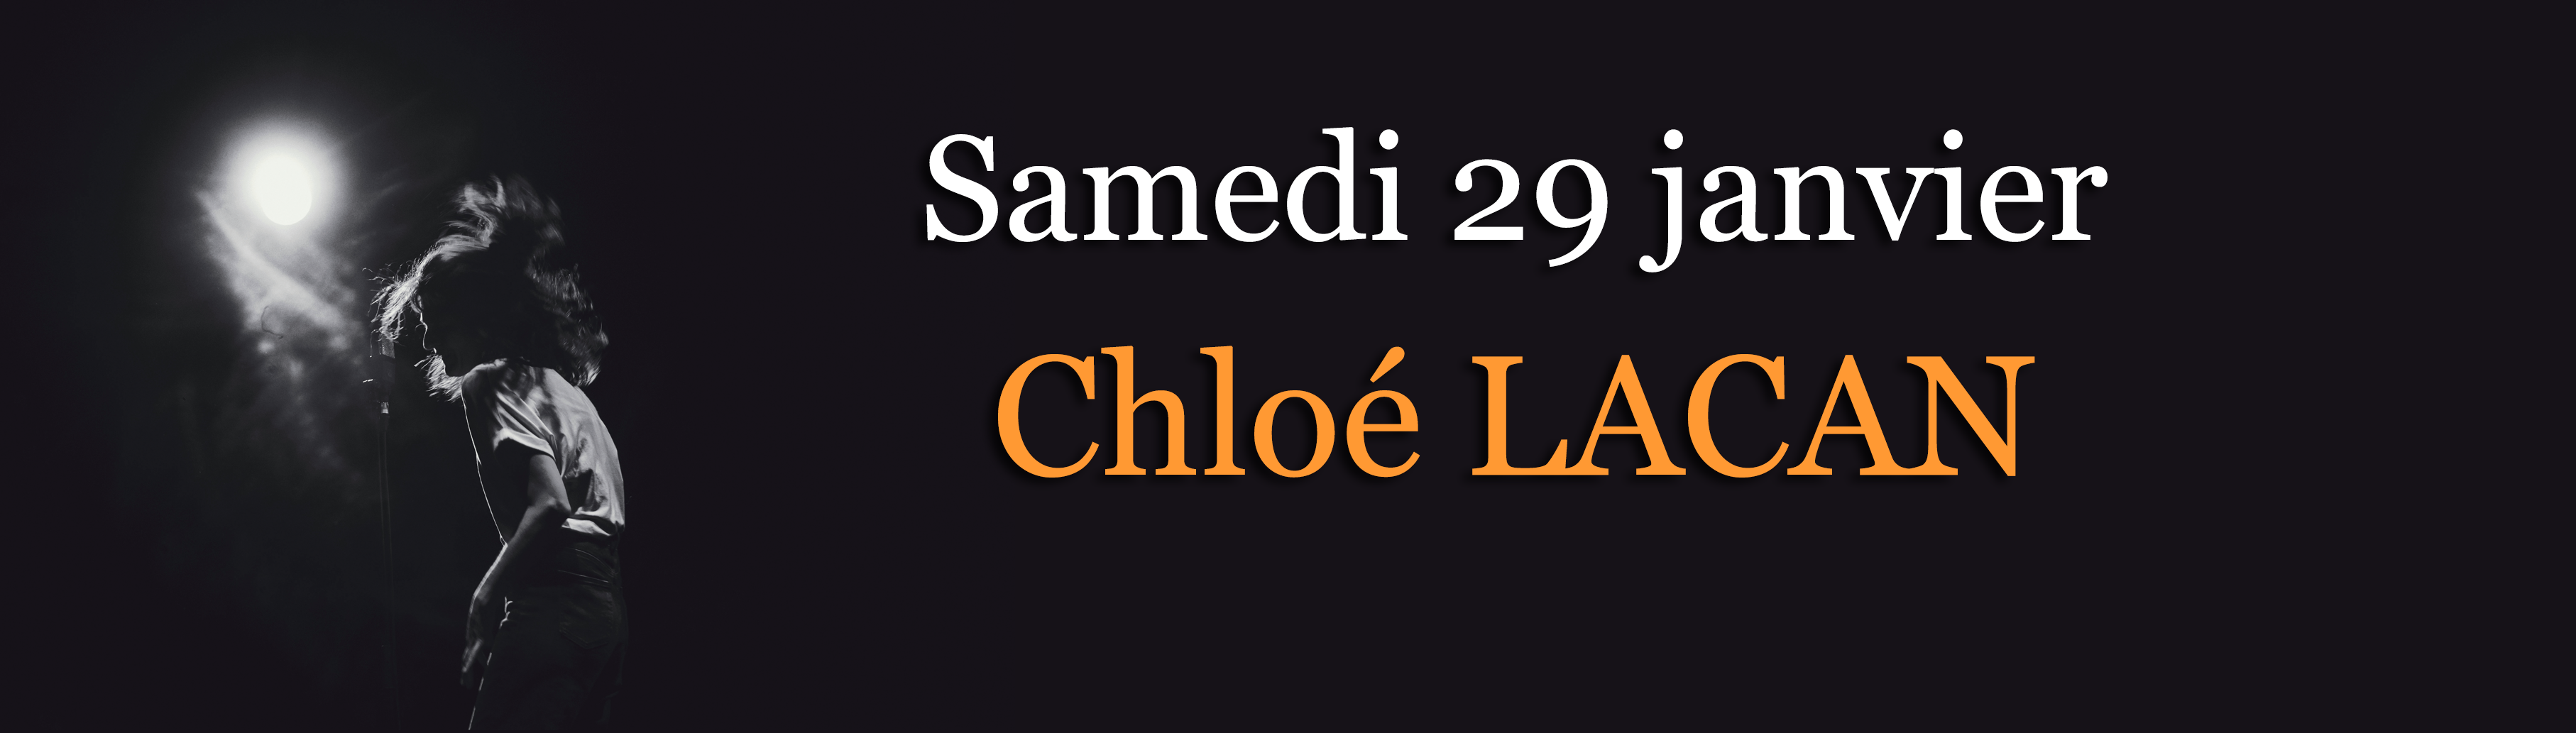 Chloé Lacan